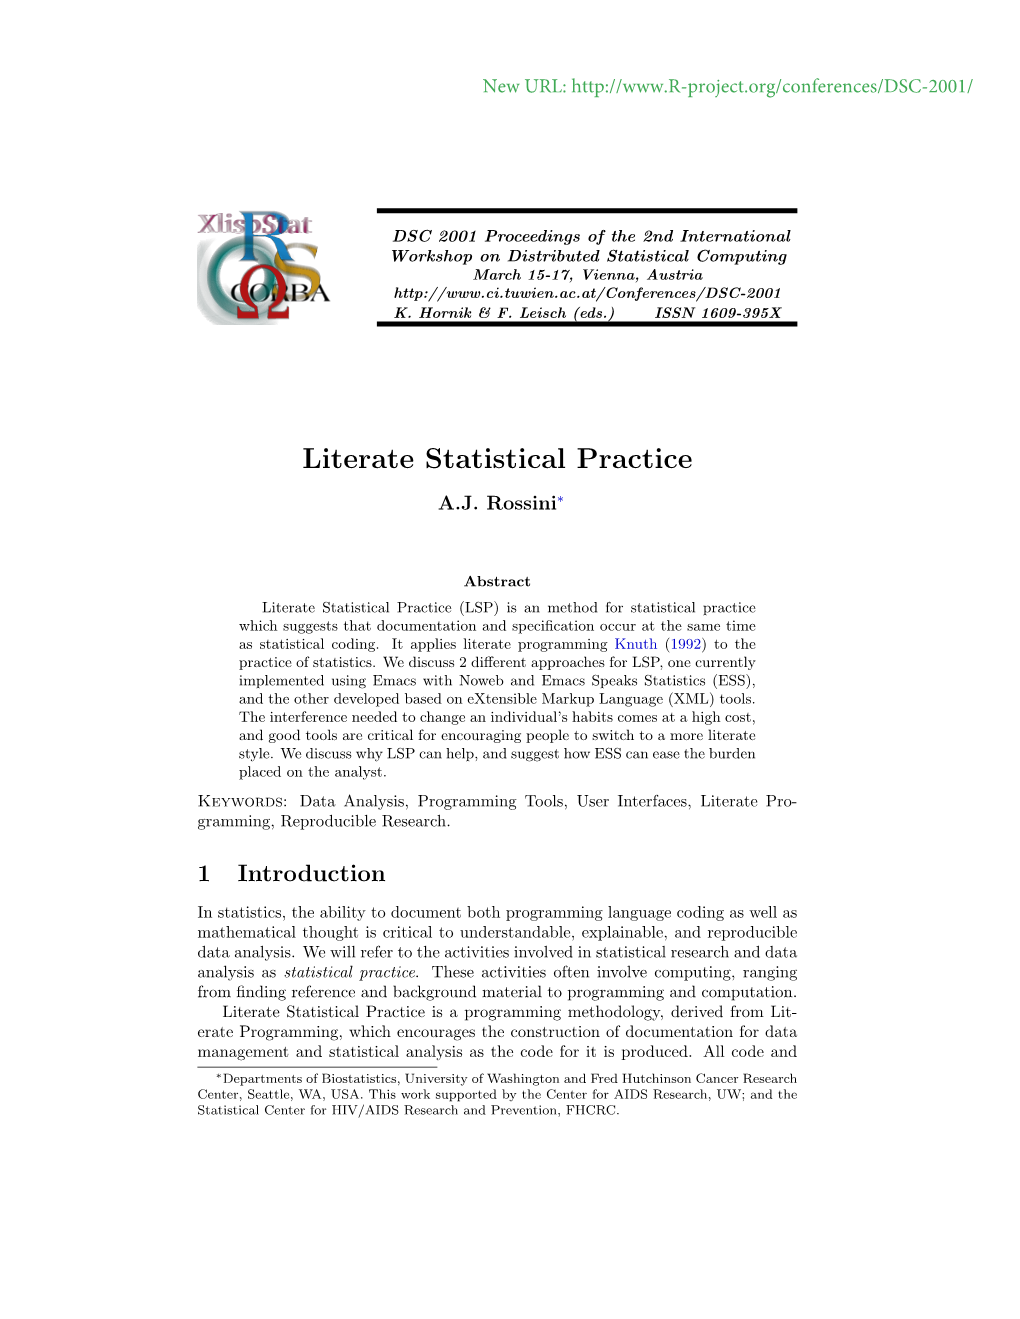 Literate Statistical Practice